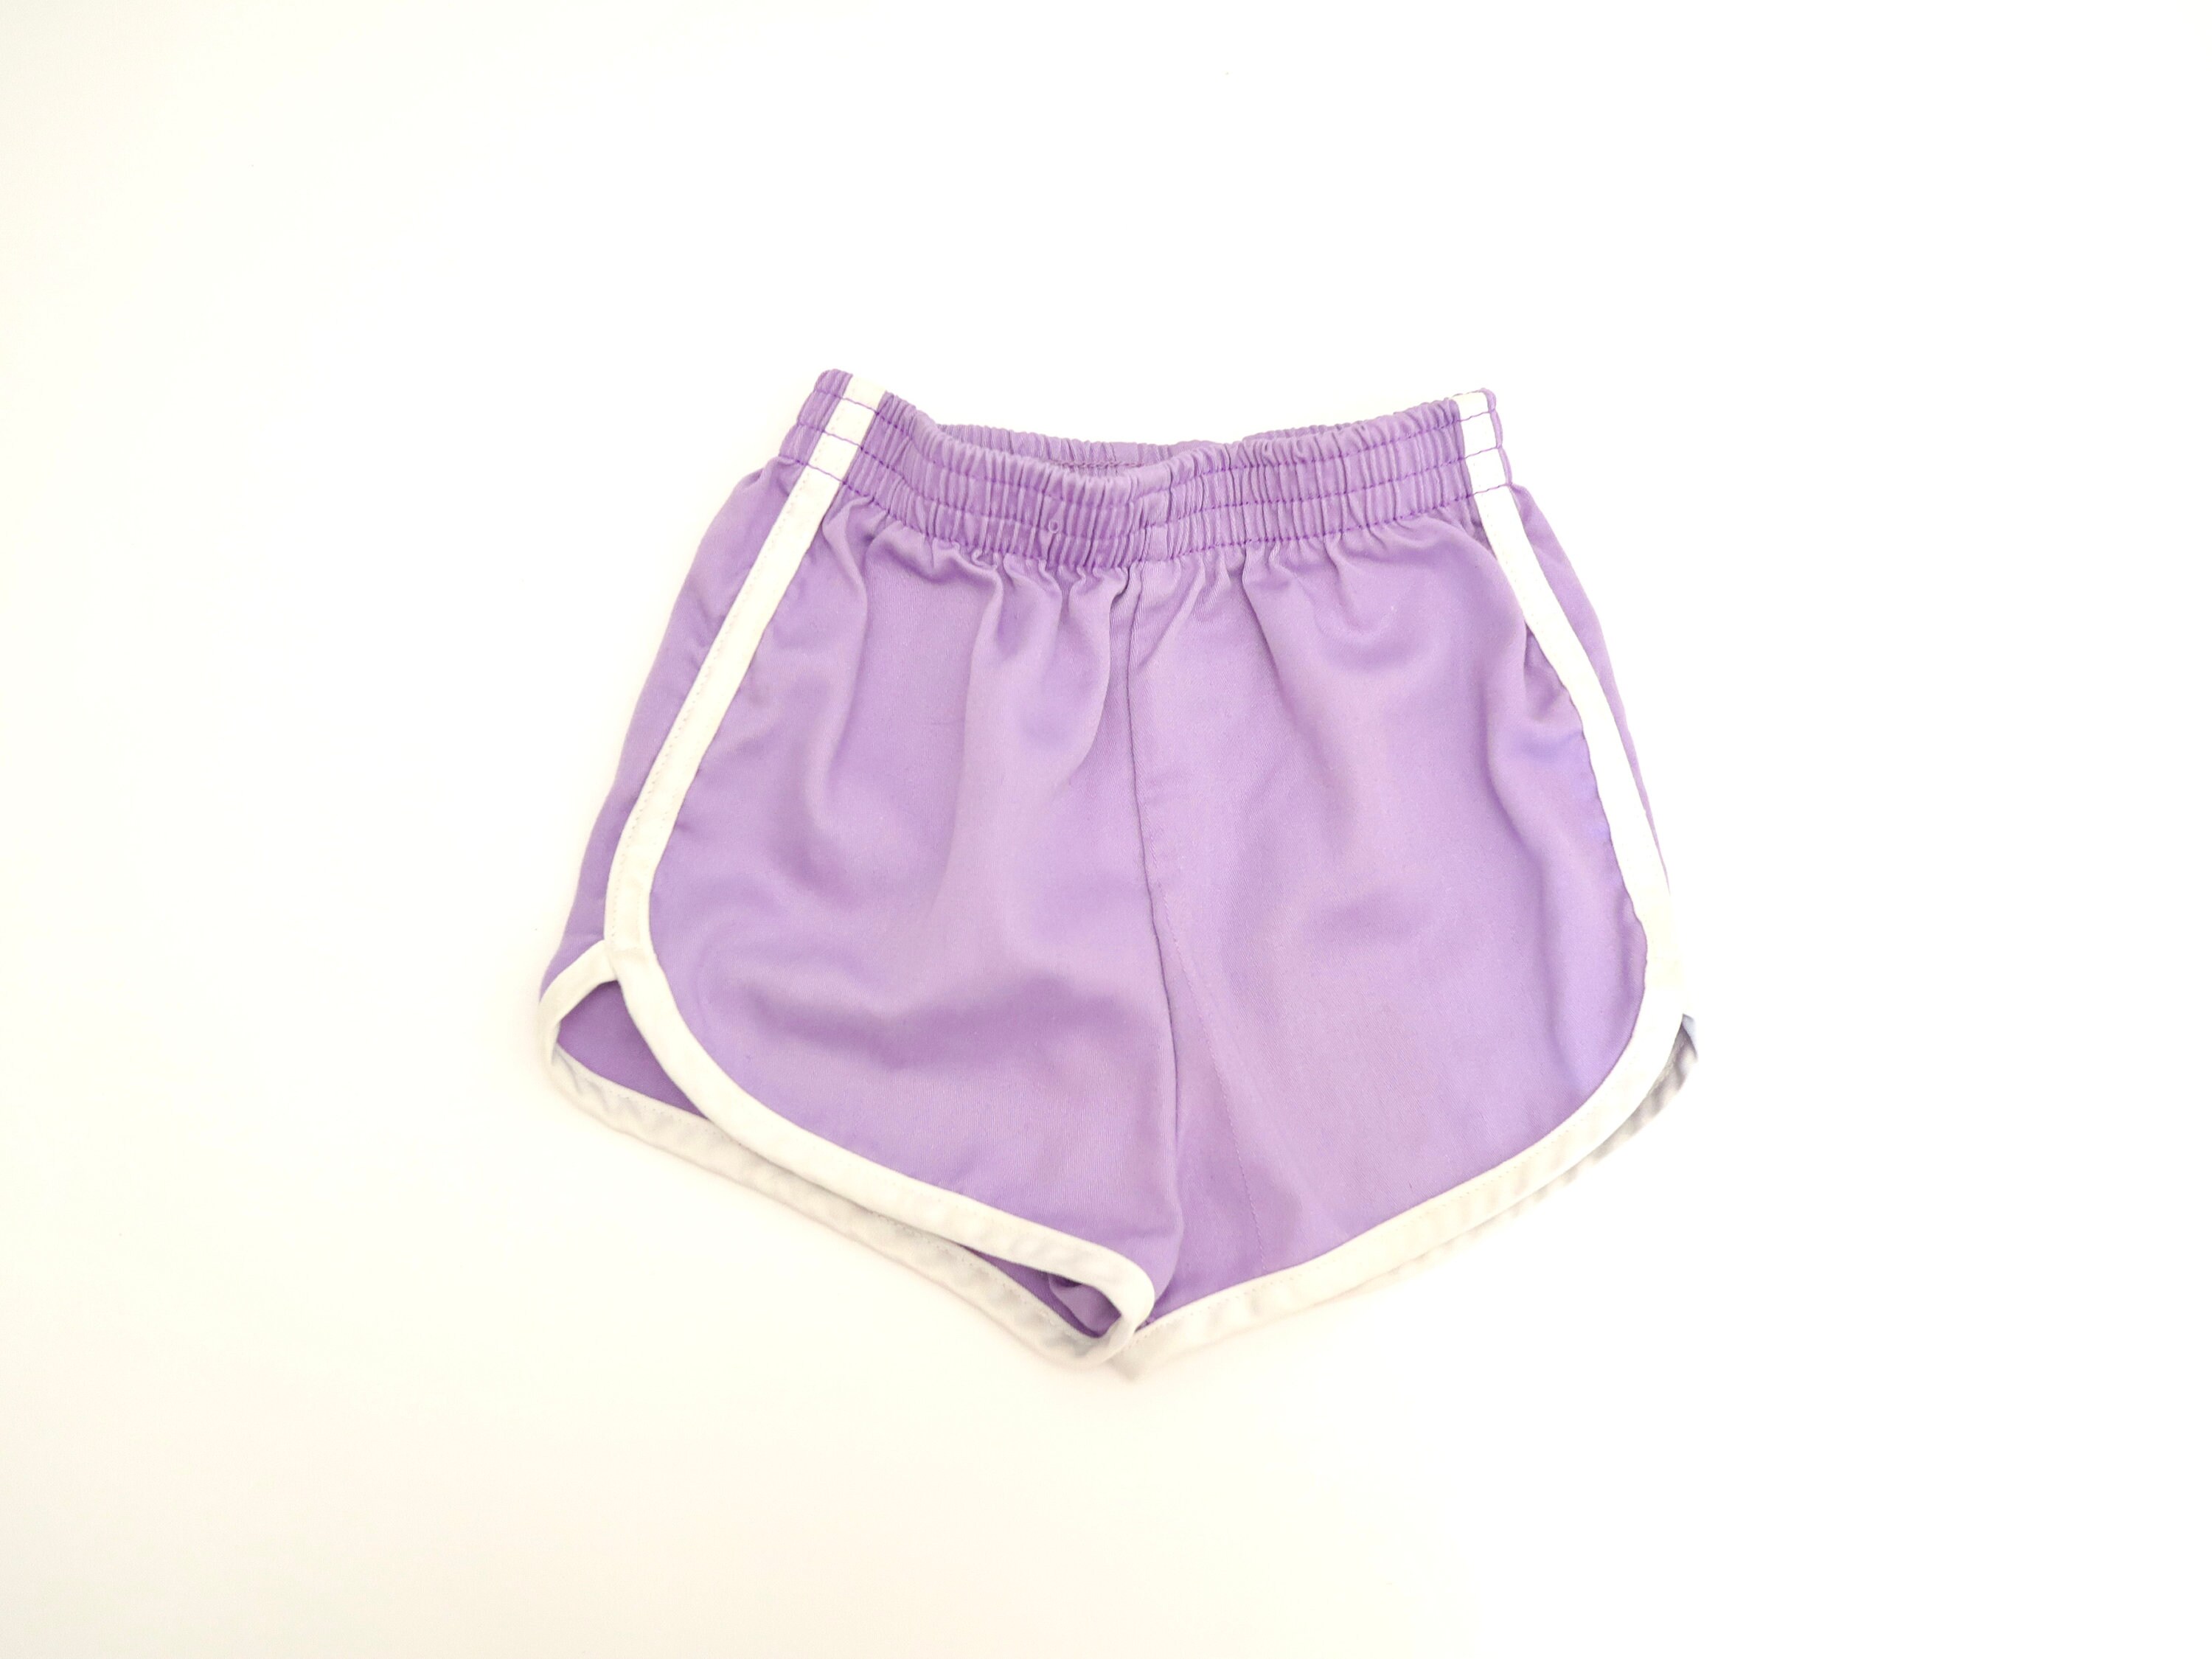 Boys Soft Cotton Athletic Short - UPF 50 + | Athletic Purple